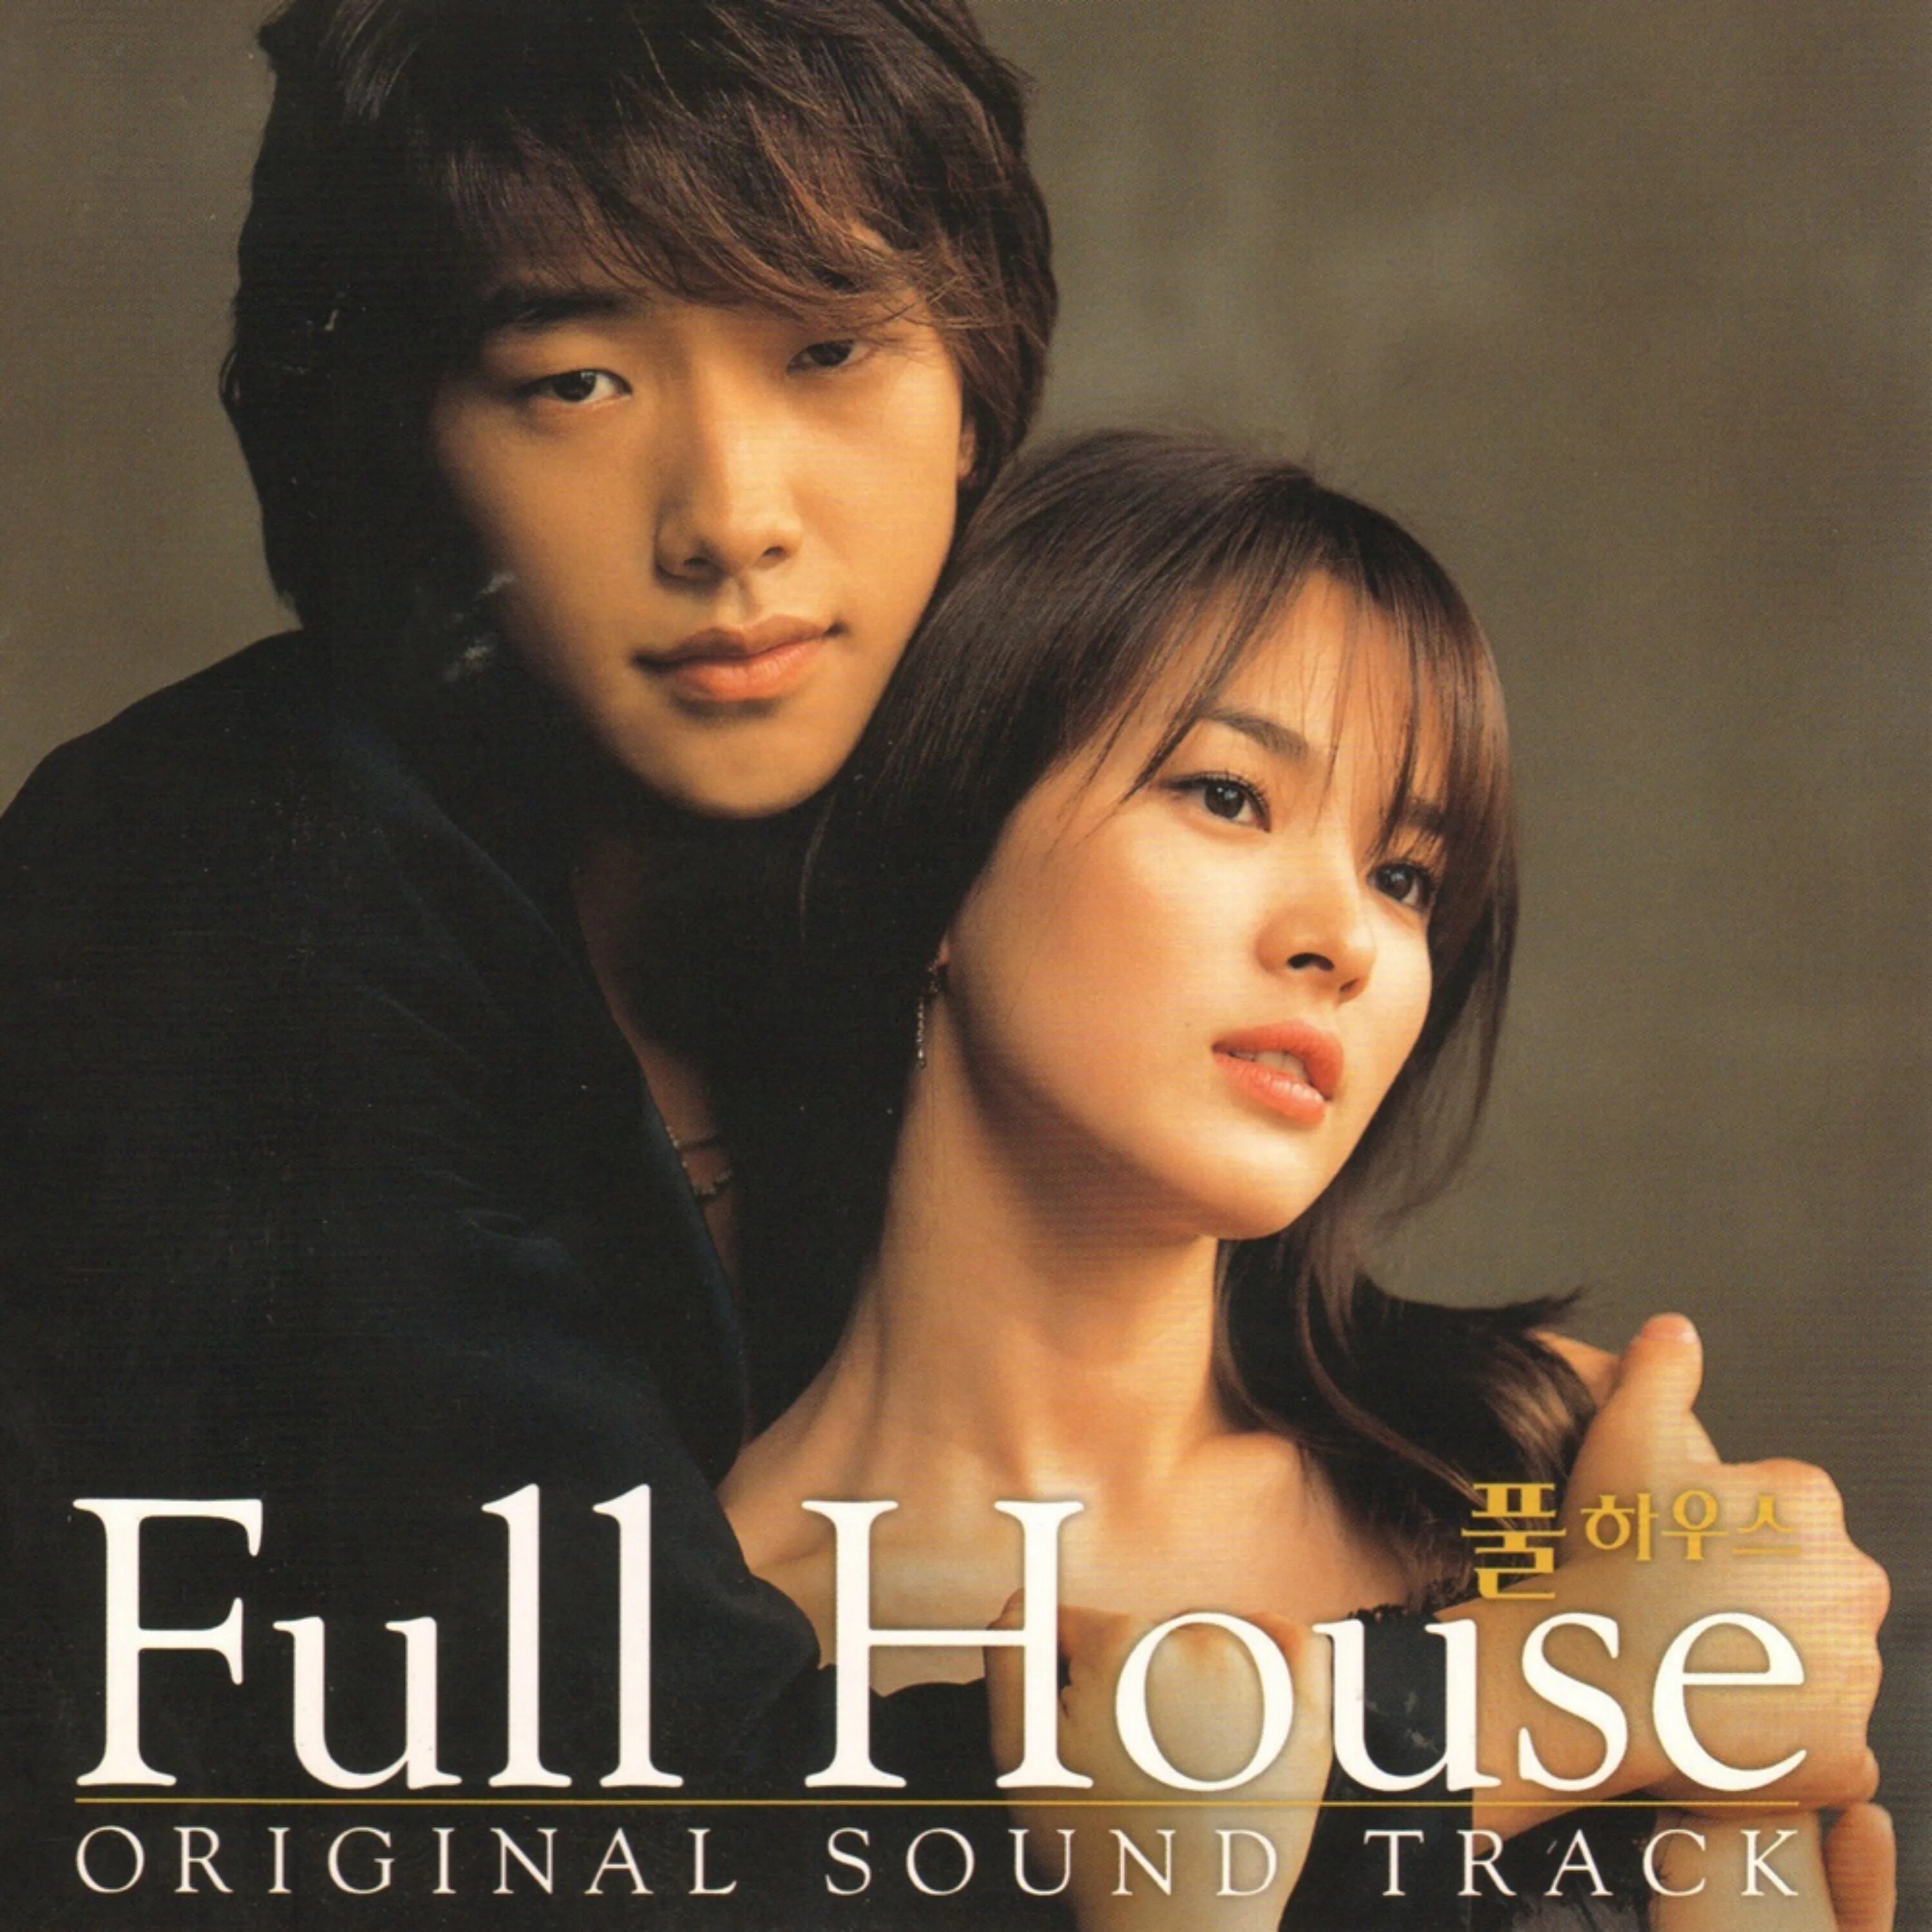 Full house version. Дорама полный дом 2004. Дорама полный дом корейская. Полный дом 2 дорама. Полный дом 2 дорама корейская.